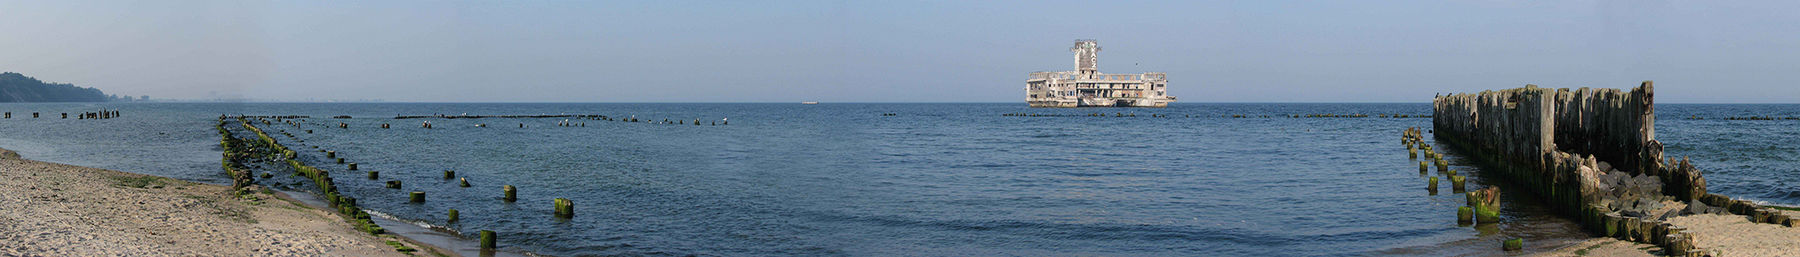 Gdynia banner.jpg